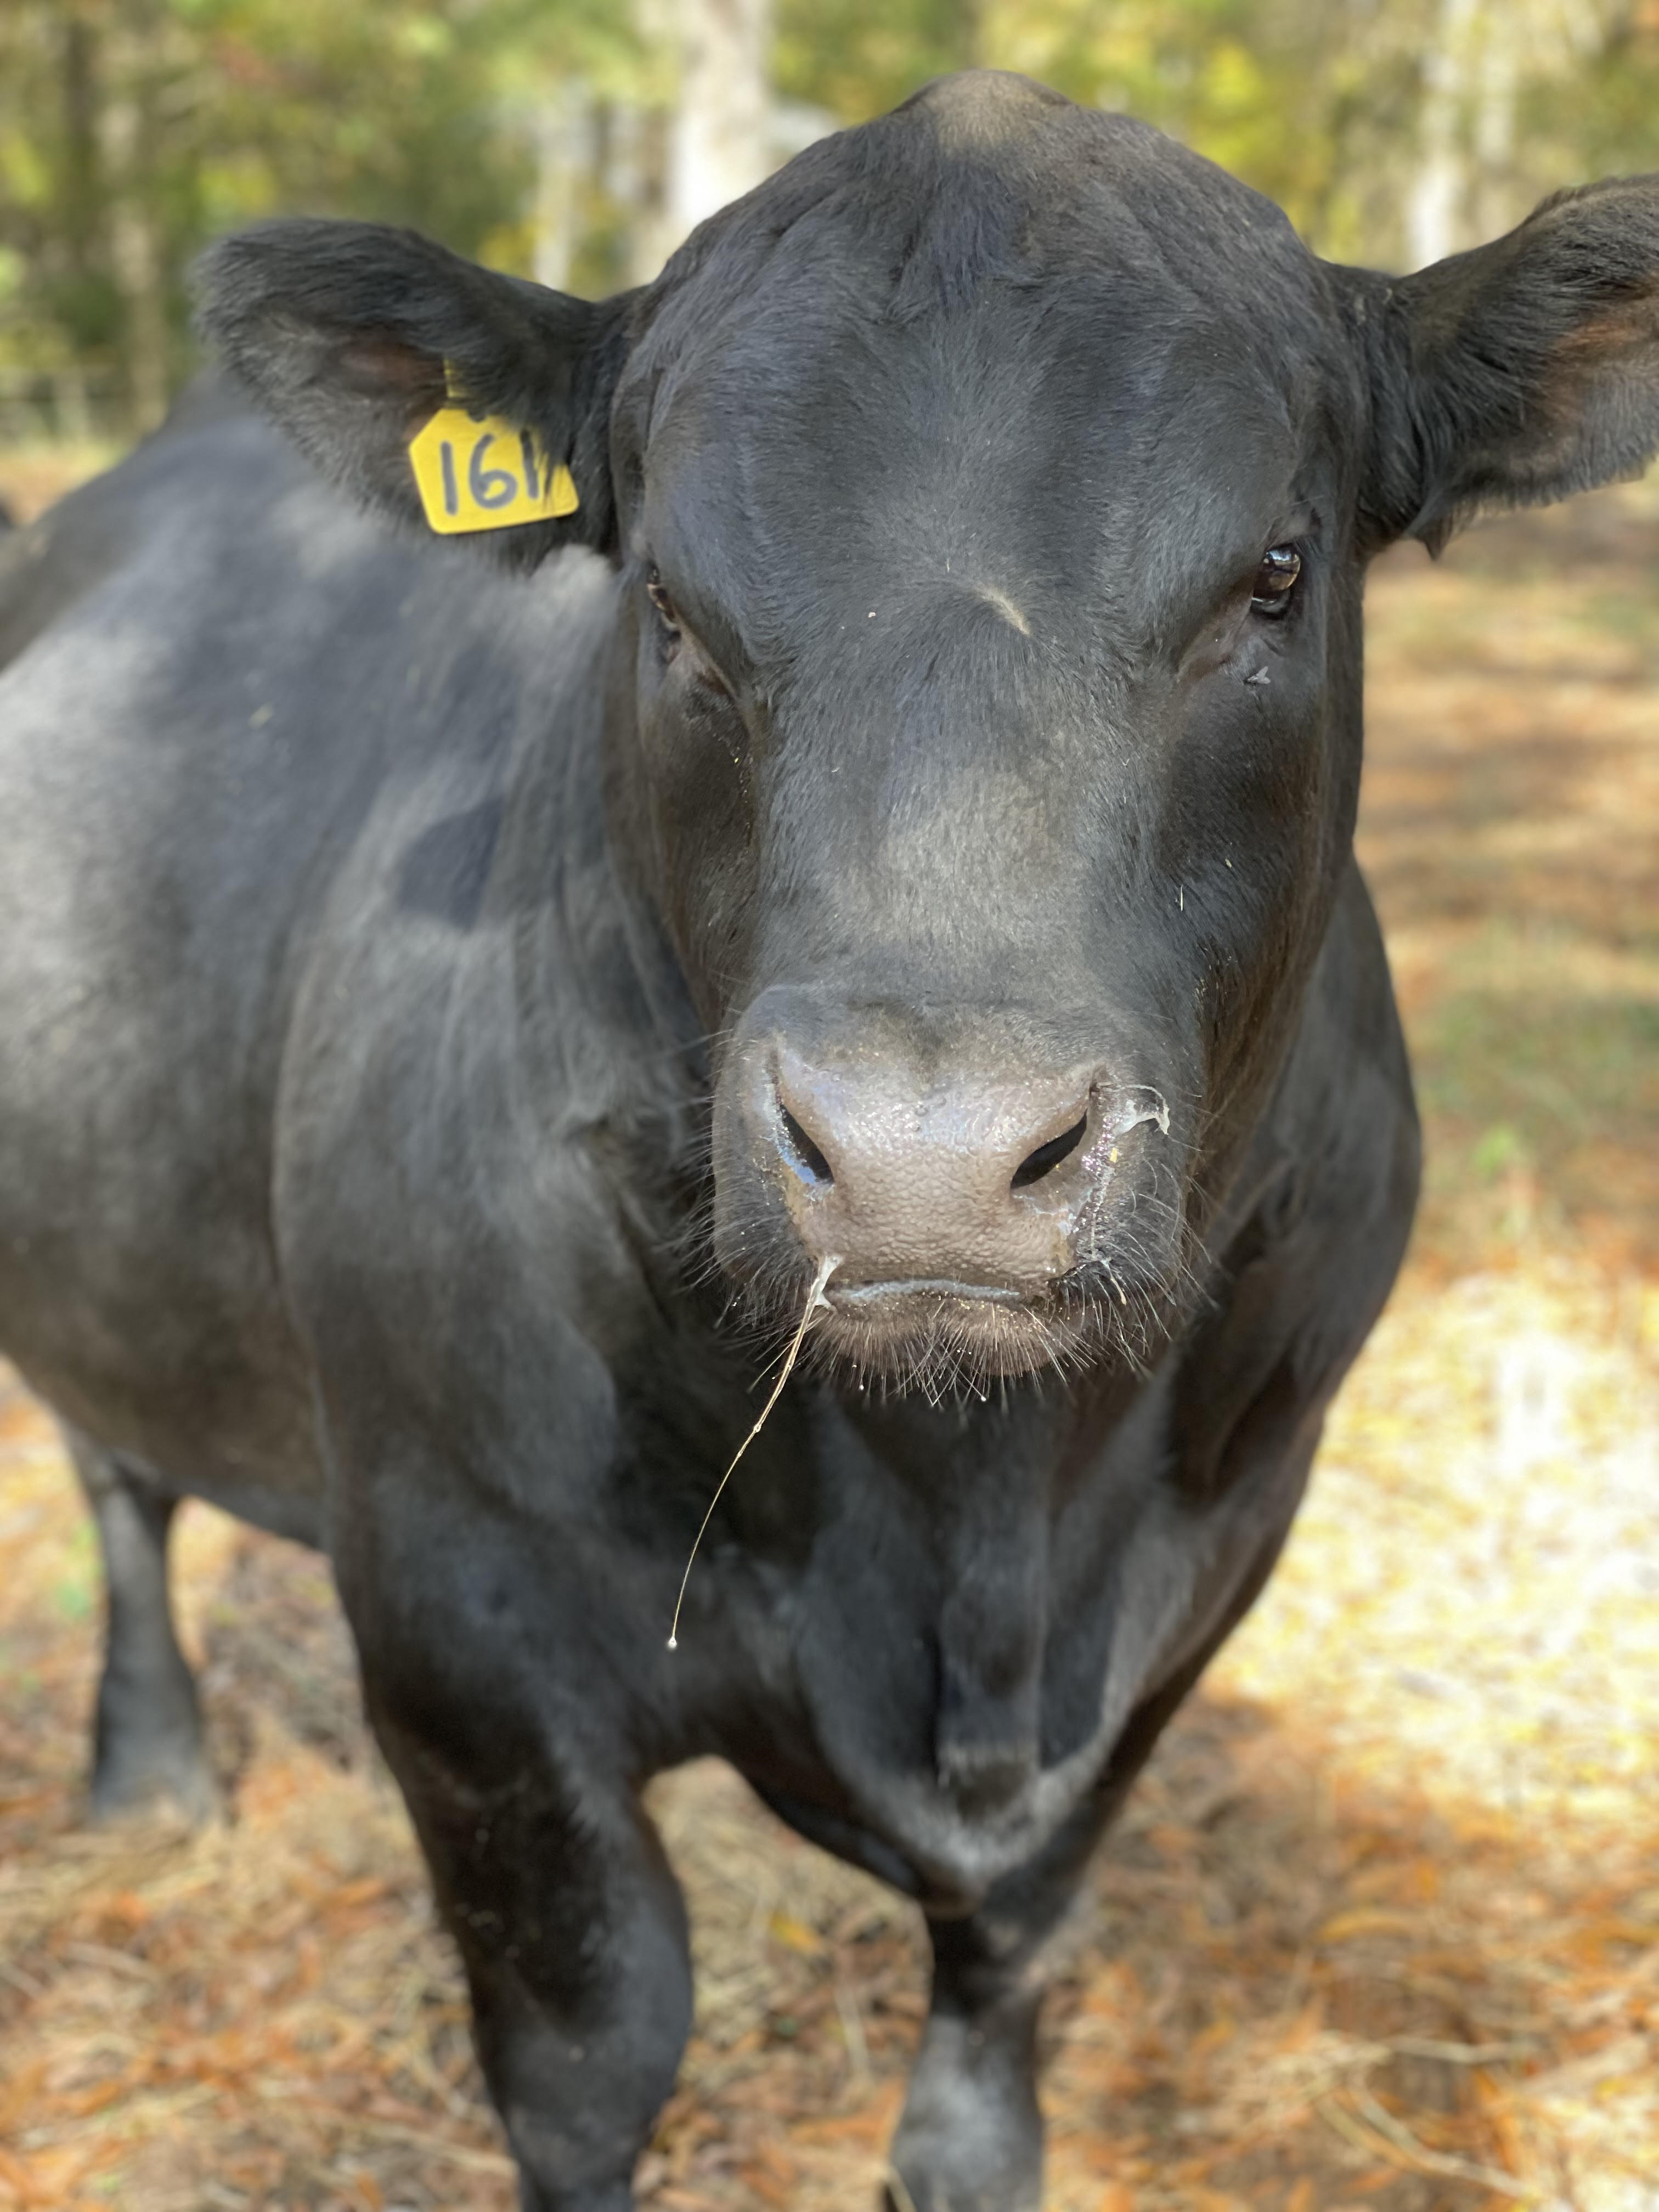 A black cow with an ear tag.